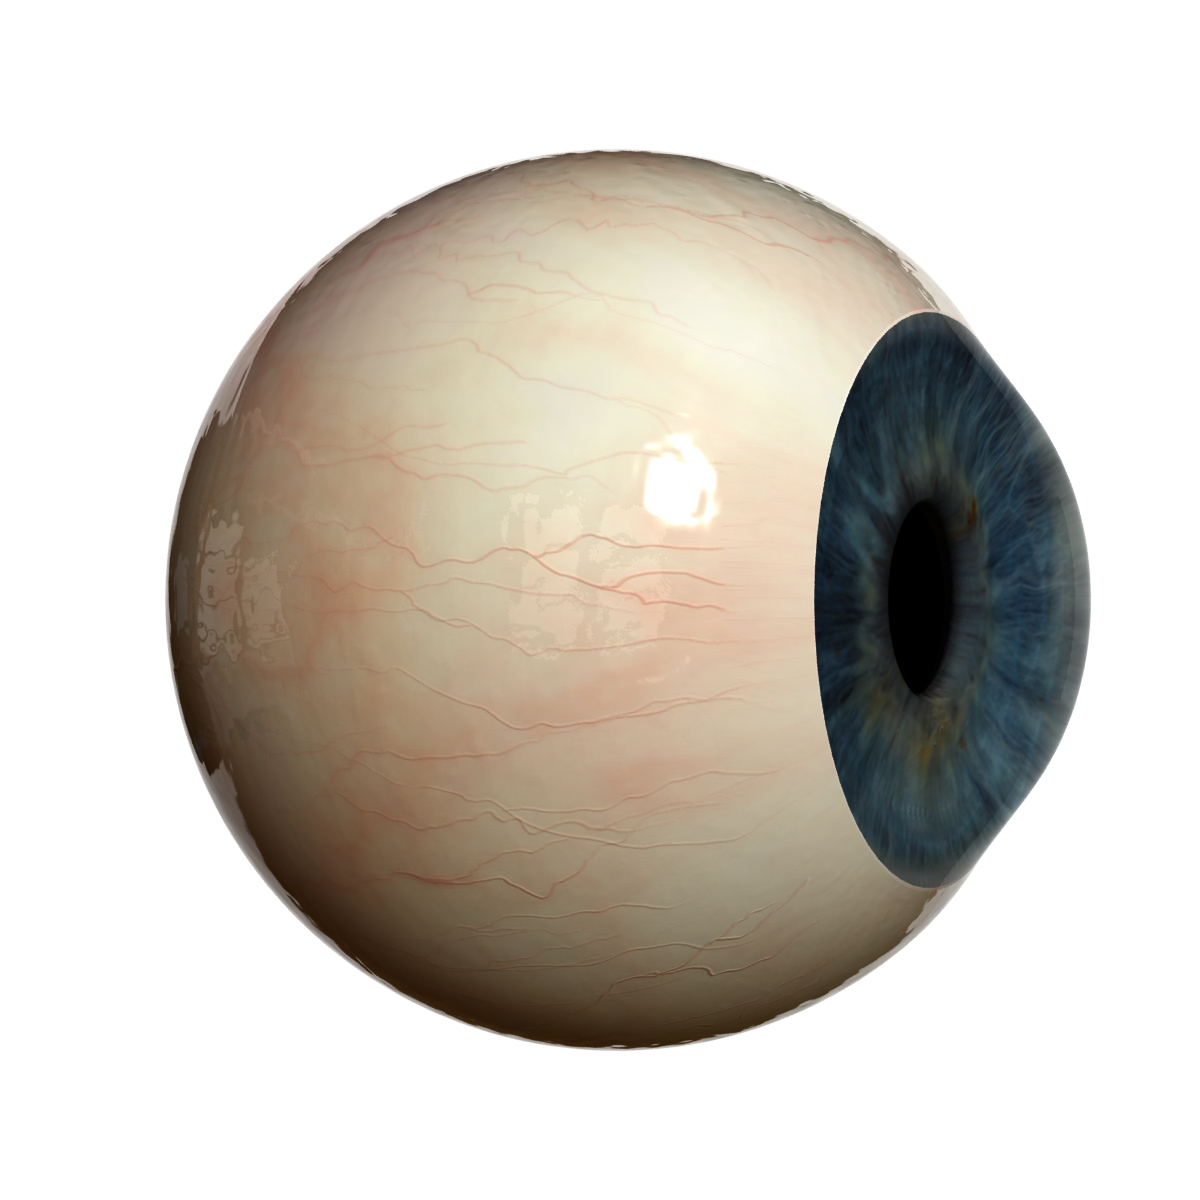 3d eyeball sclera iris